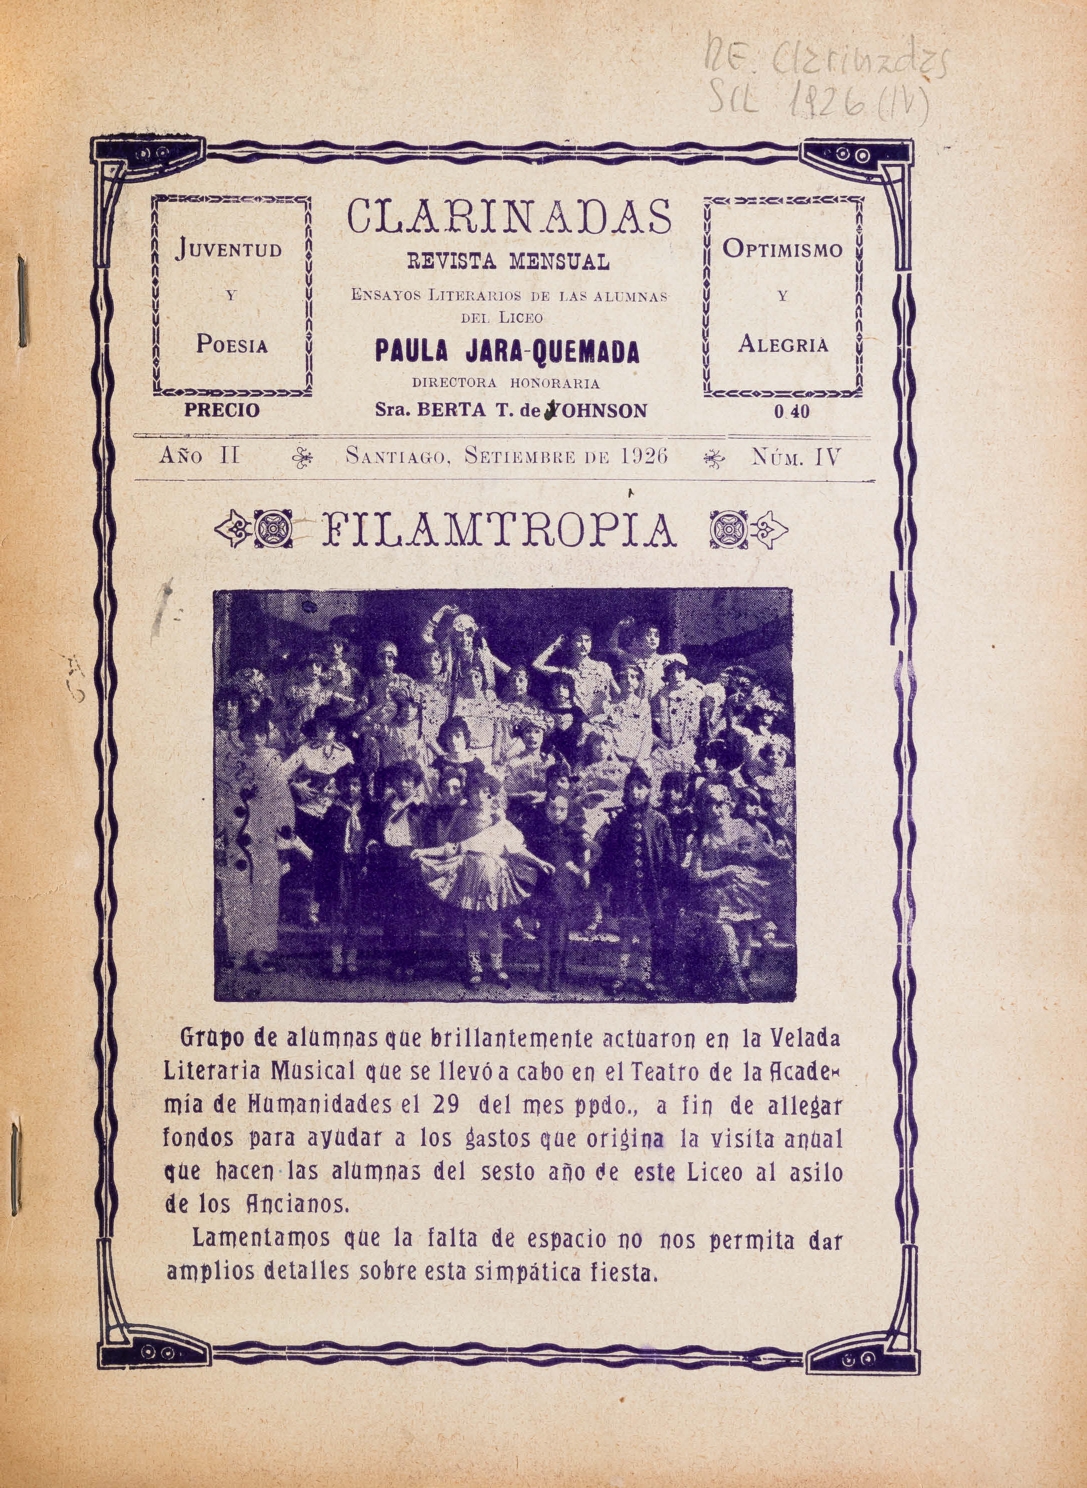 Fragmentos de El Loco de Kahlil Gibran: La Ciudad Santa (Excerpts from The Madman by Kahlil Gibran: The Blessed City, translated into Spanish), Clarinidas, Santiago de Chile, Year II, No. IV, Sept. 1926, pp. 5-6.